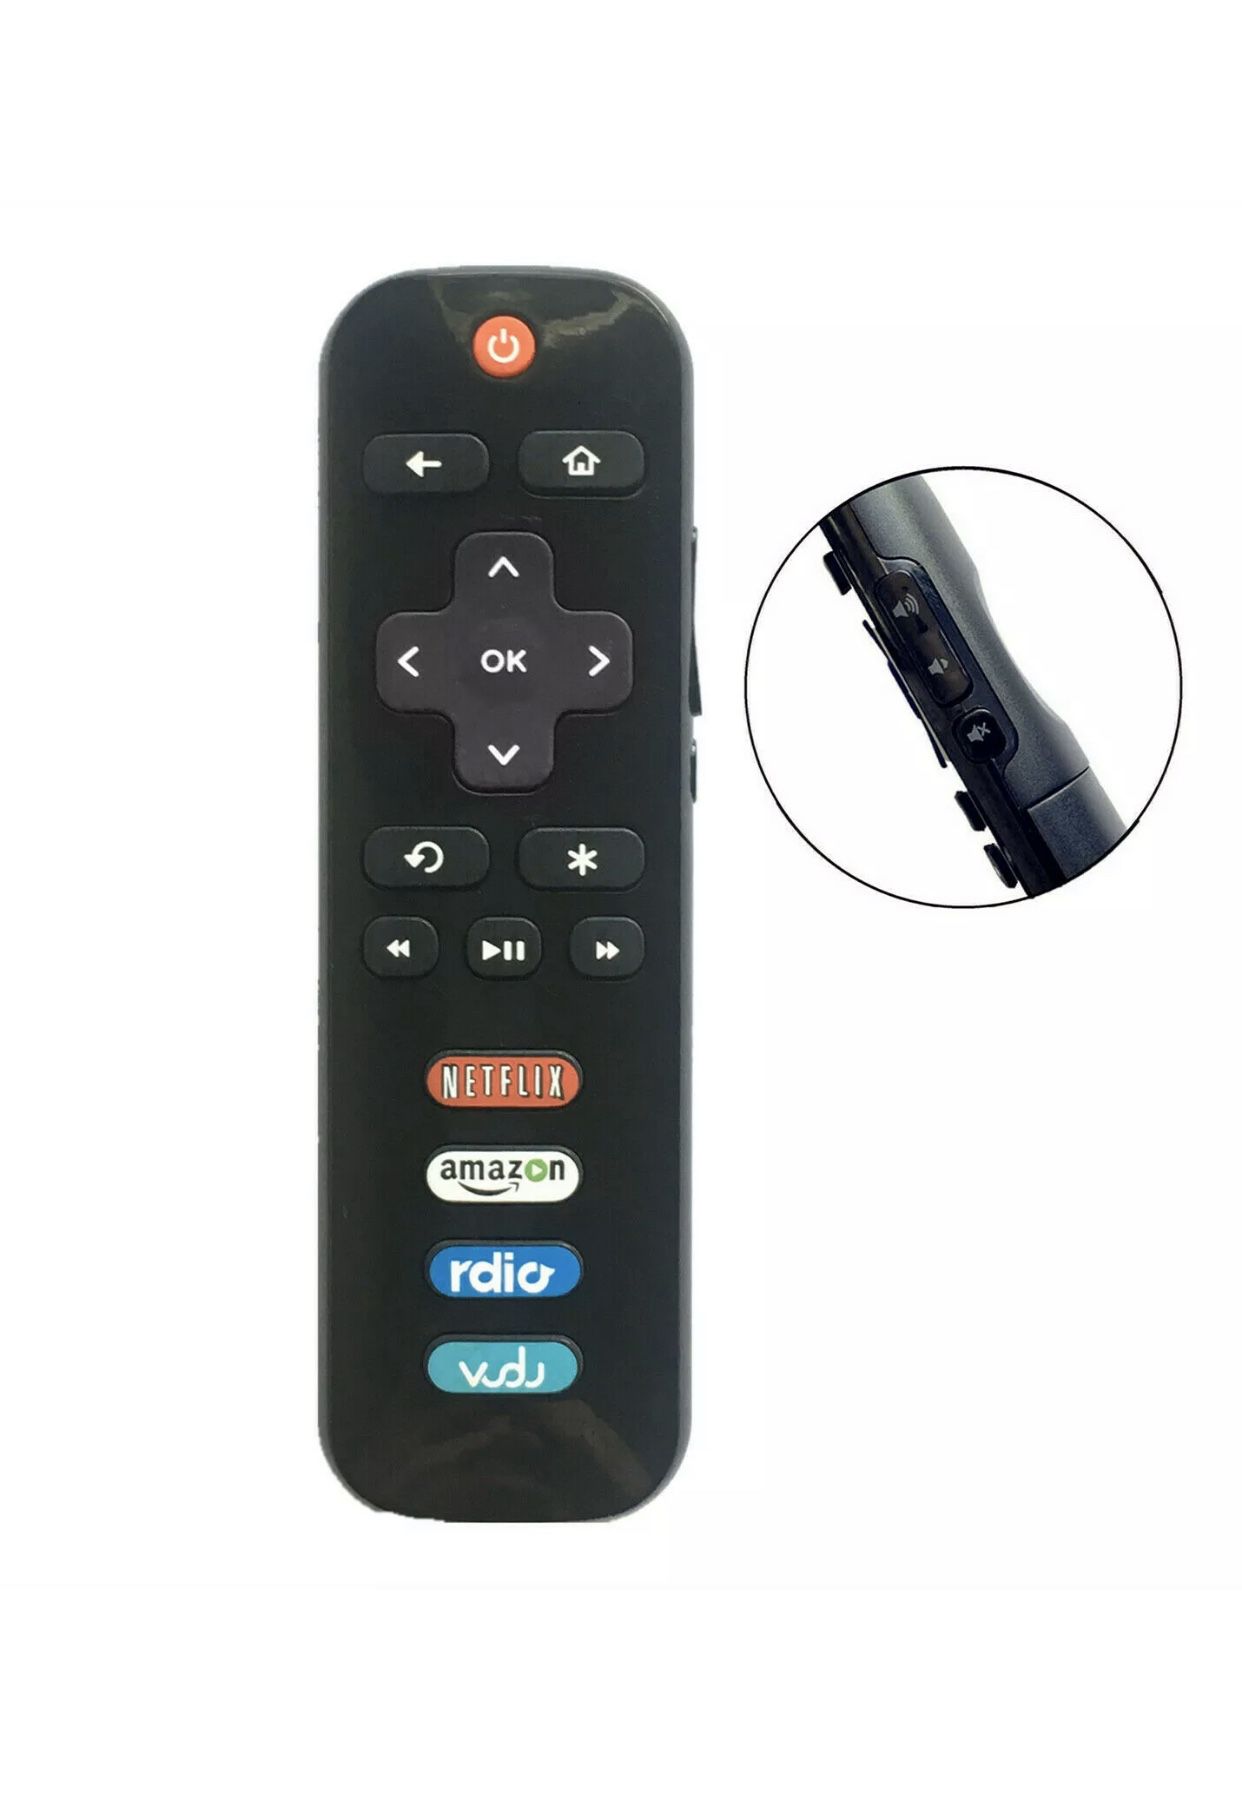 IR Remote Control for HISENSE Roku TV with NETFLIX amazon Rdio Vudu app keys